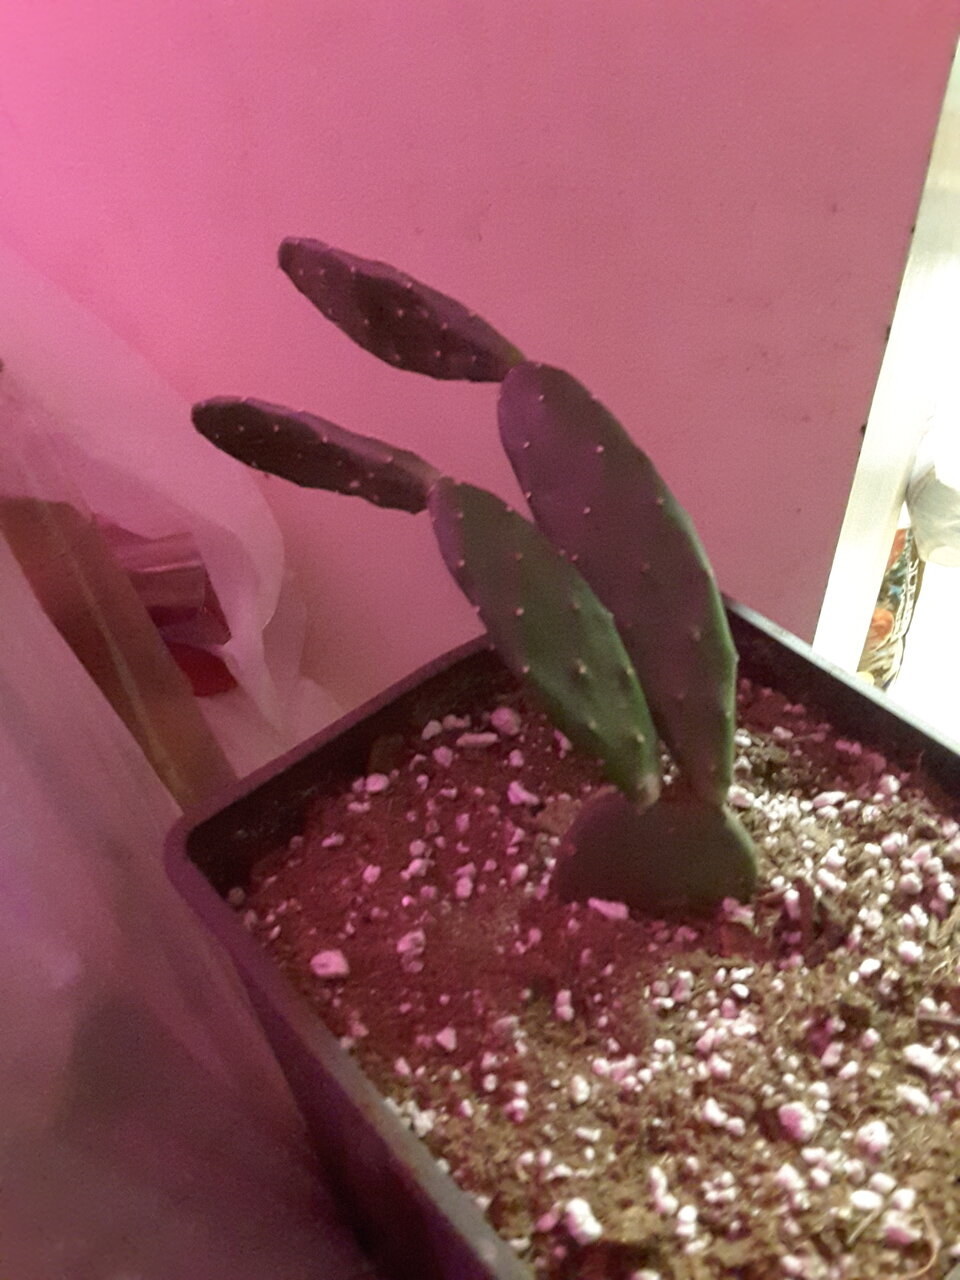 New xmas cactus got one 4 my gma for xmas